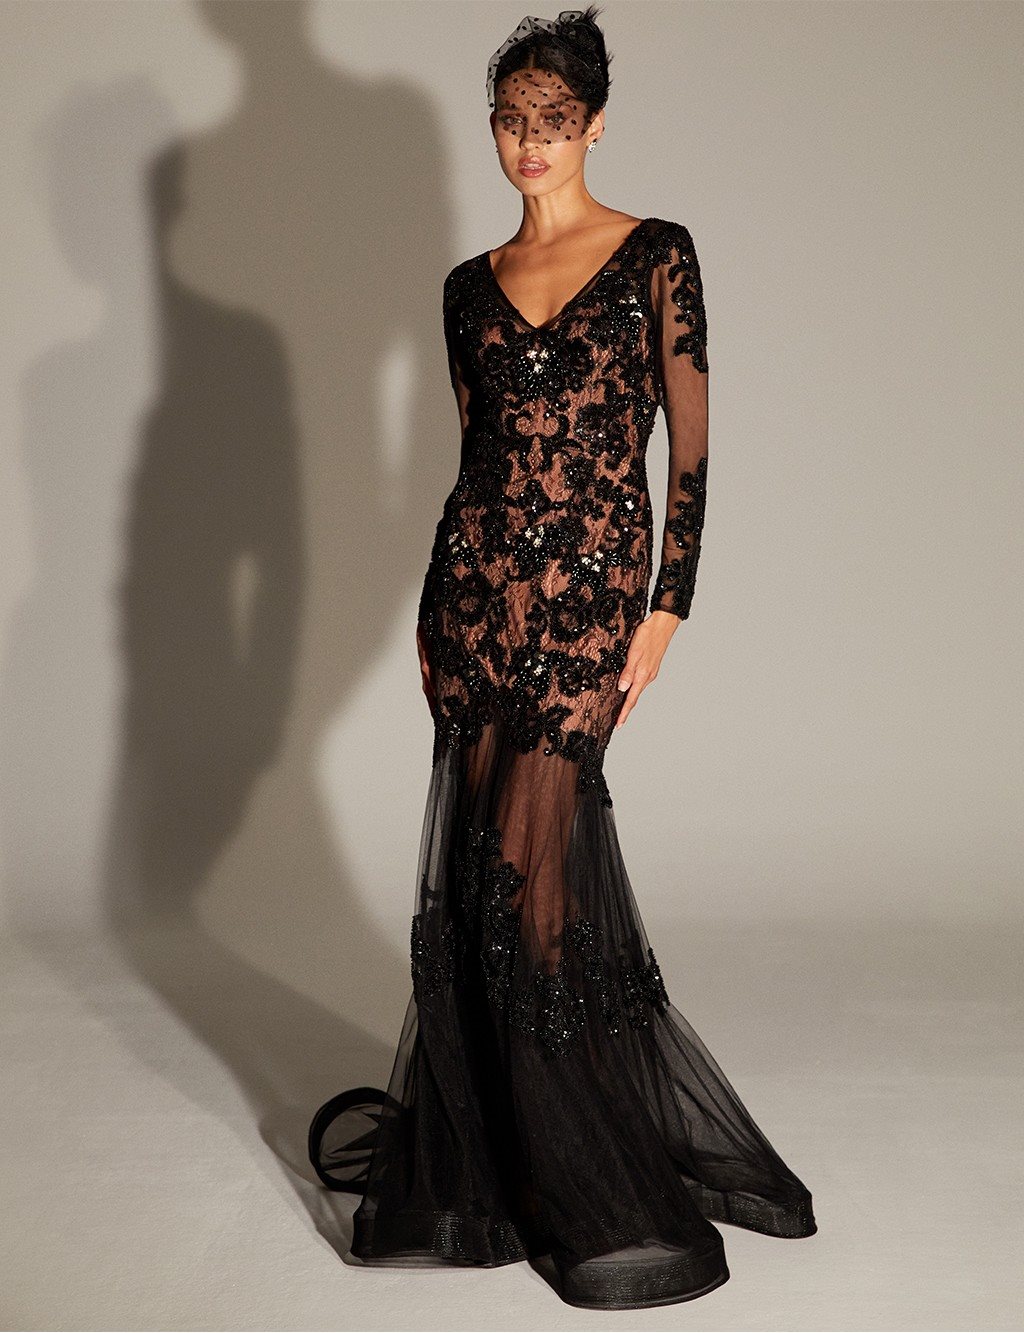 TIARA Tulle Skirt Embroidered Evening Dress B20 26146 Black